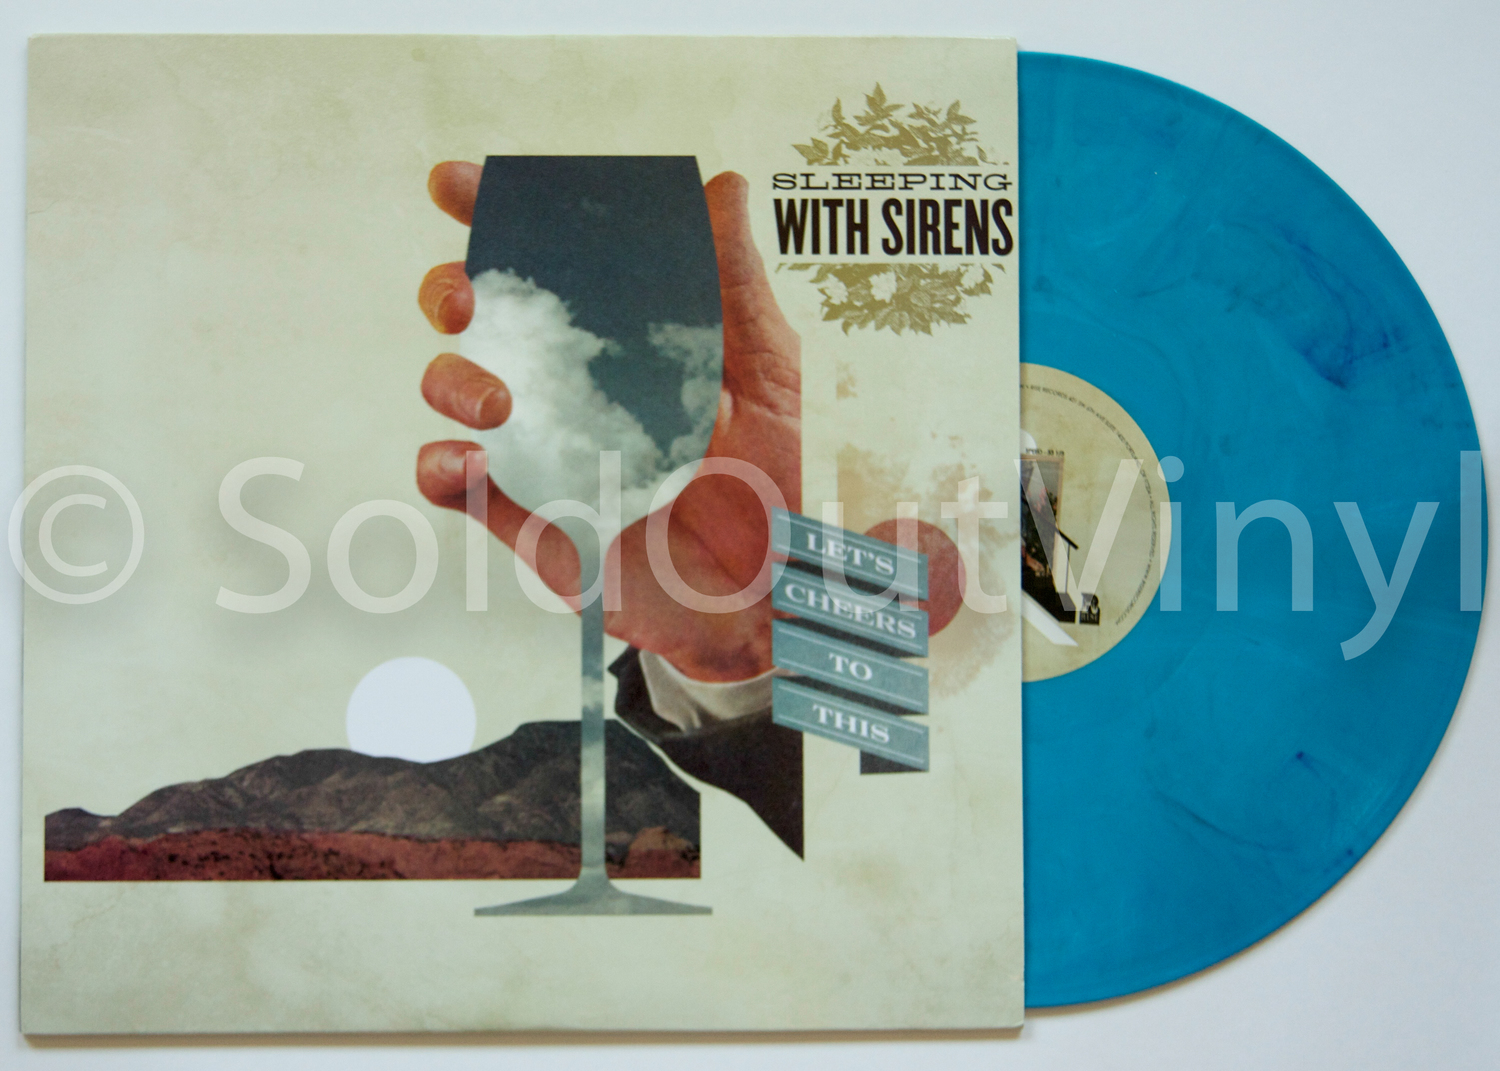 Erasure der tekst Sleeping With Sirens - Let's Cheers to This Vinyl LP — SoldOutVinyl